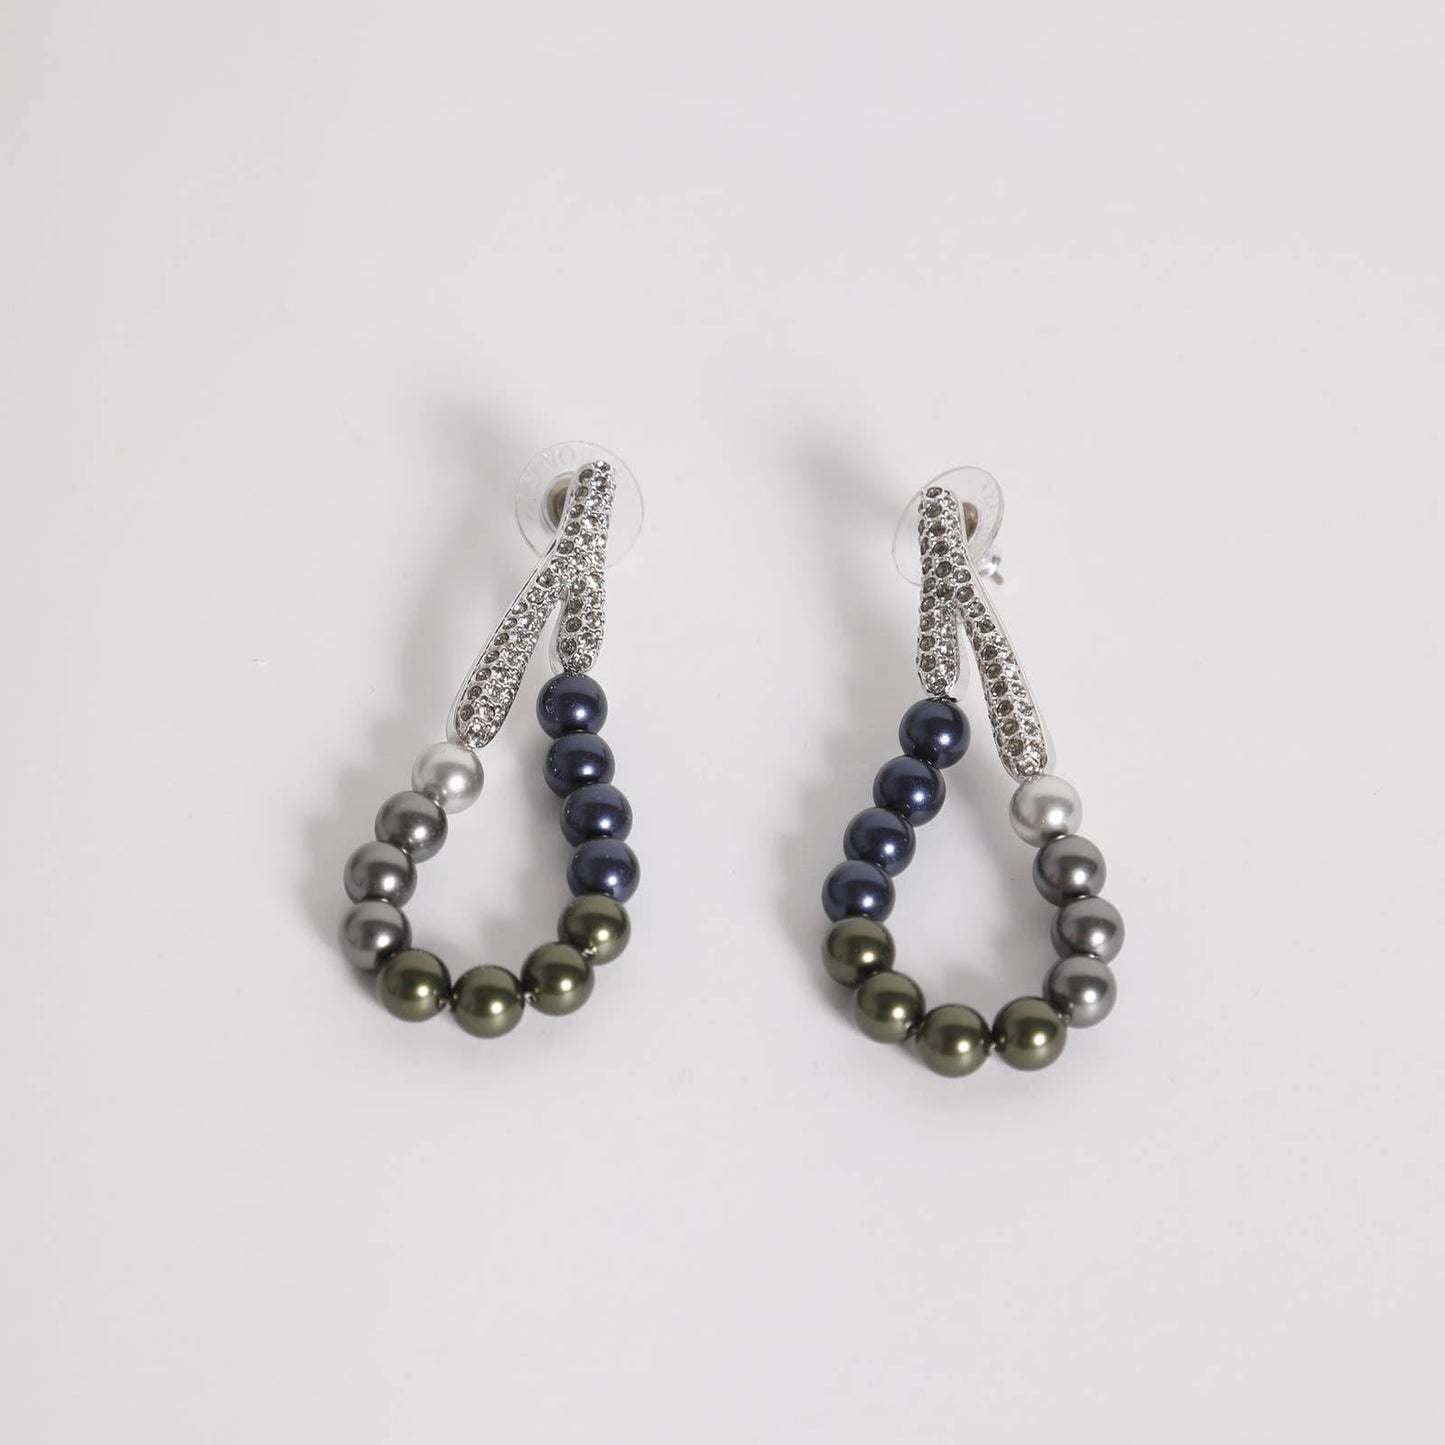 SWAROVSKI Blue, Green, Silver Pearl and Crystal Earrings